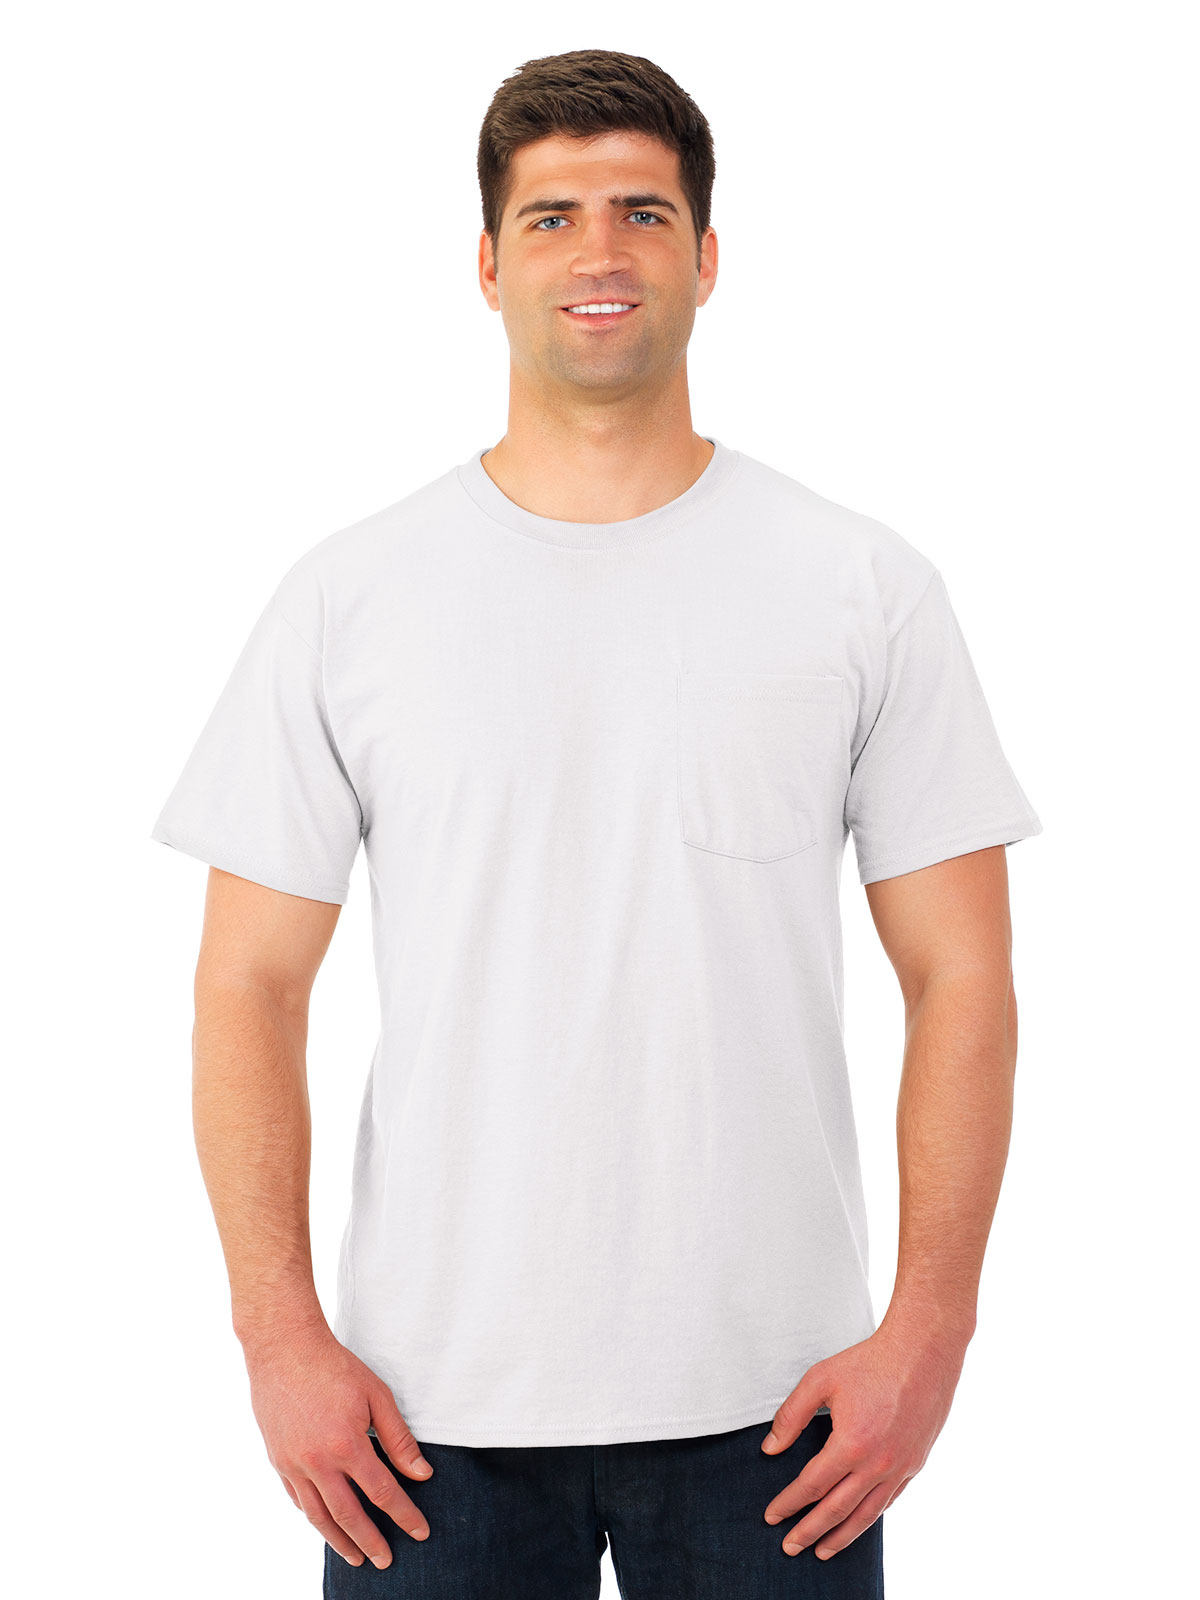 JERZEES® 29MPR DRI-POWER® Unisex Pocket T-Shirt